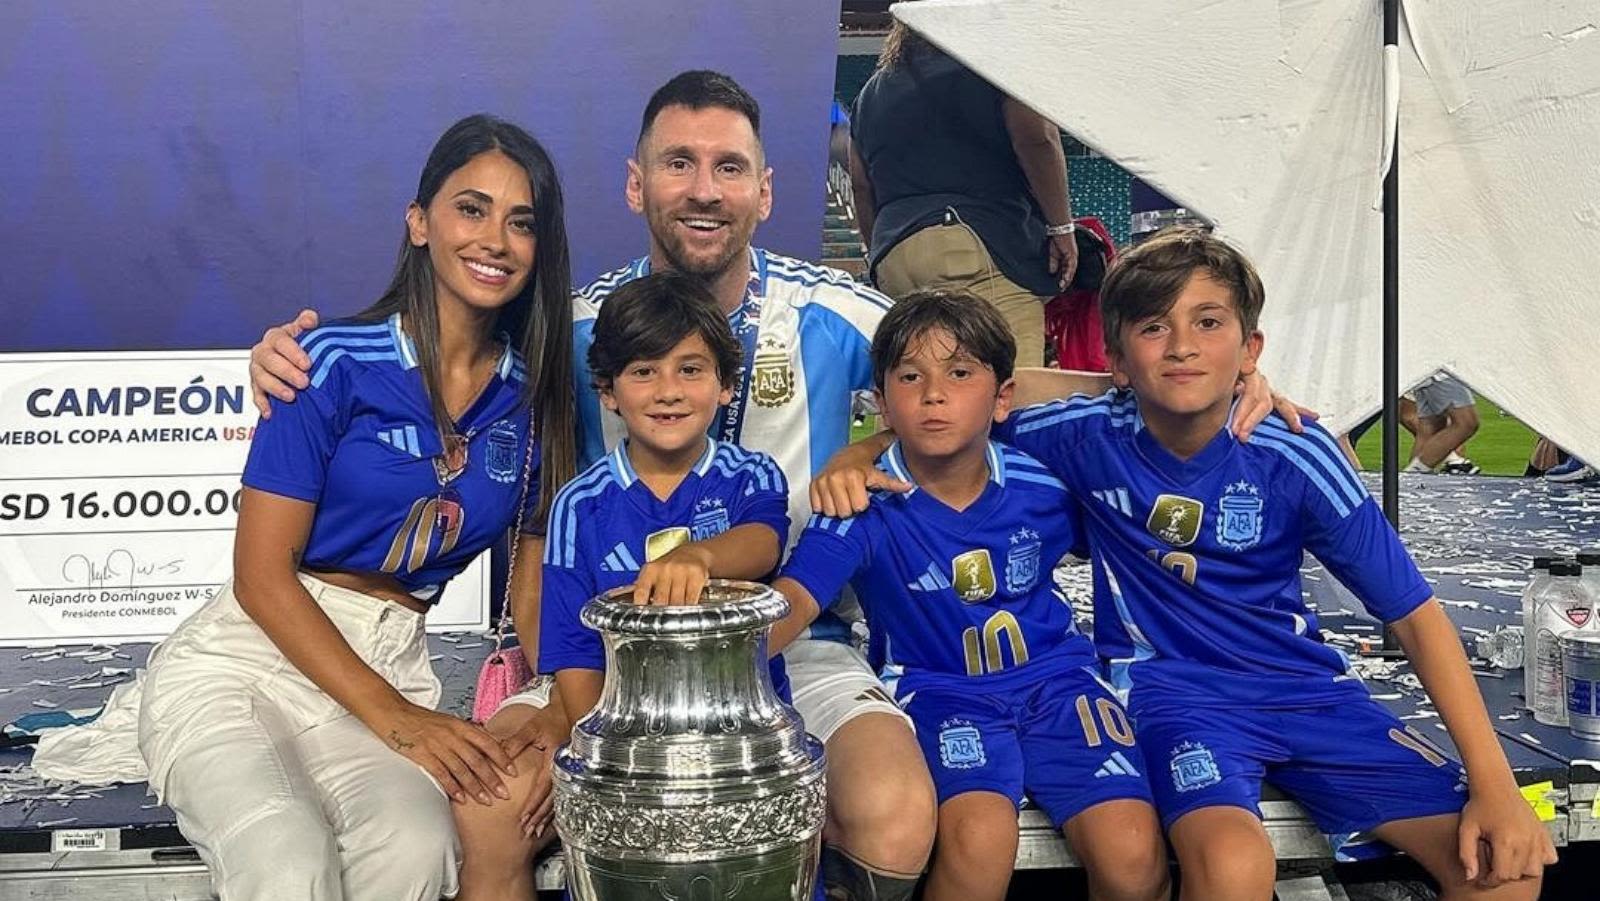 Lionel Messi celebrates Argentina's Copa América win alongside his family